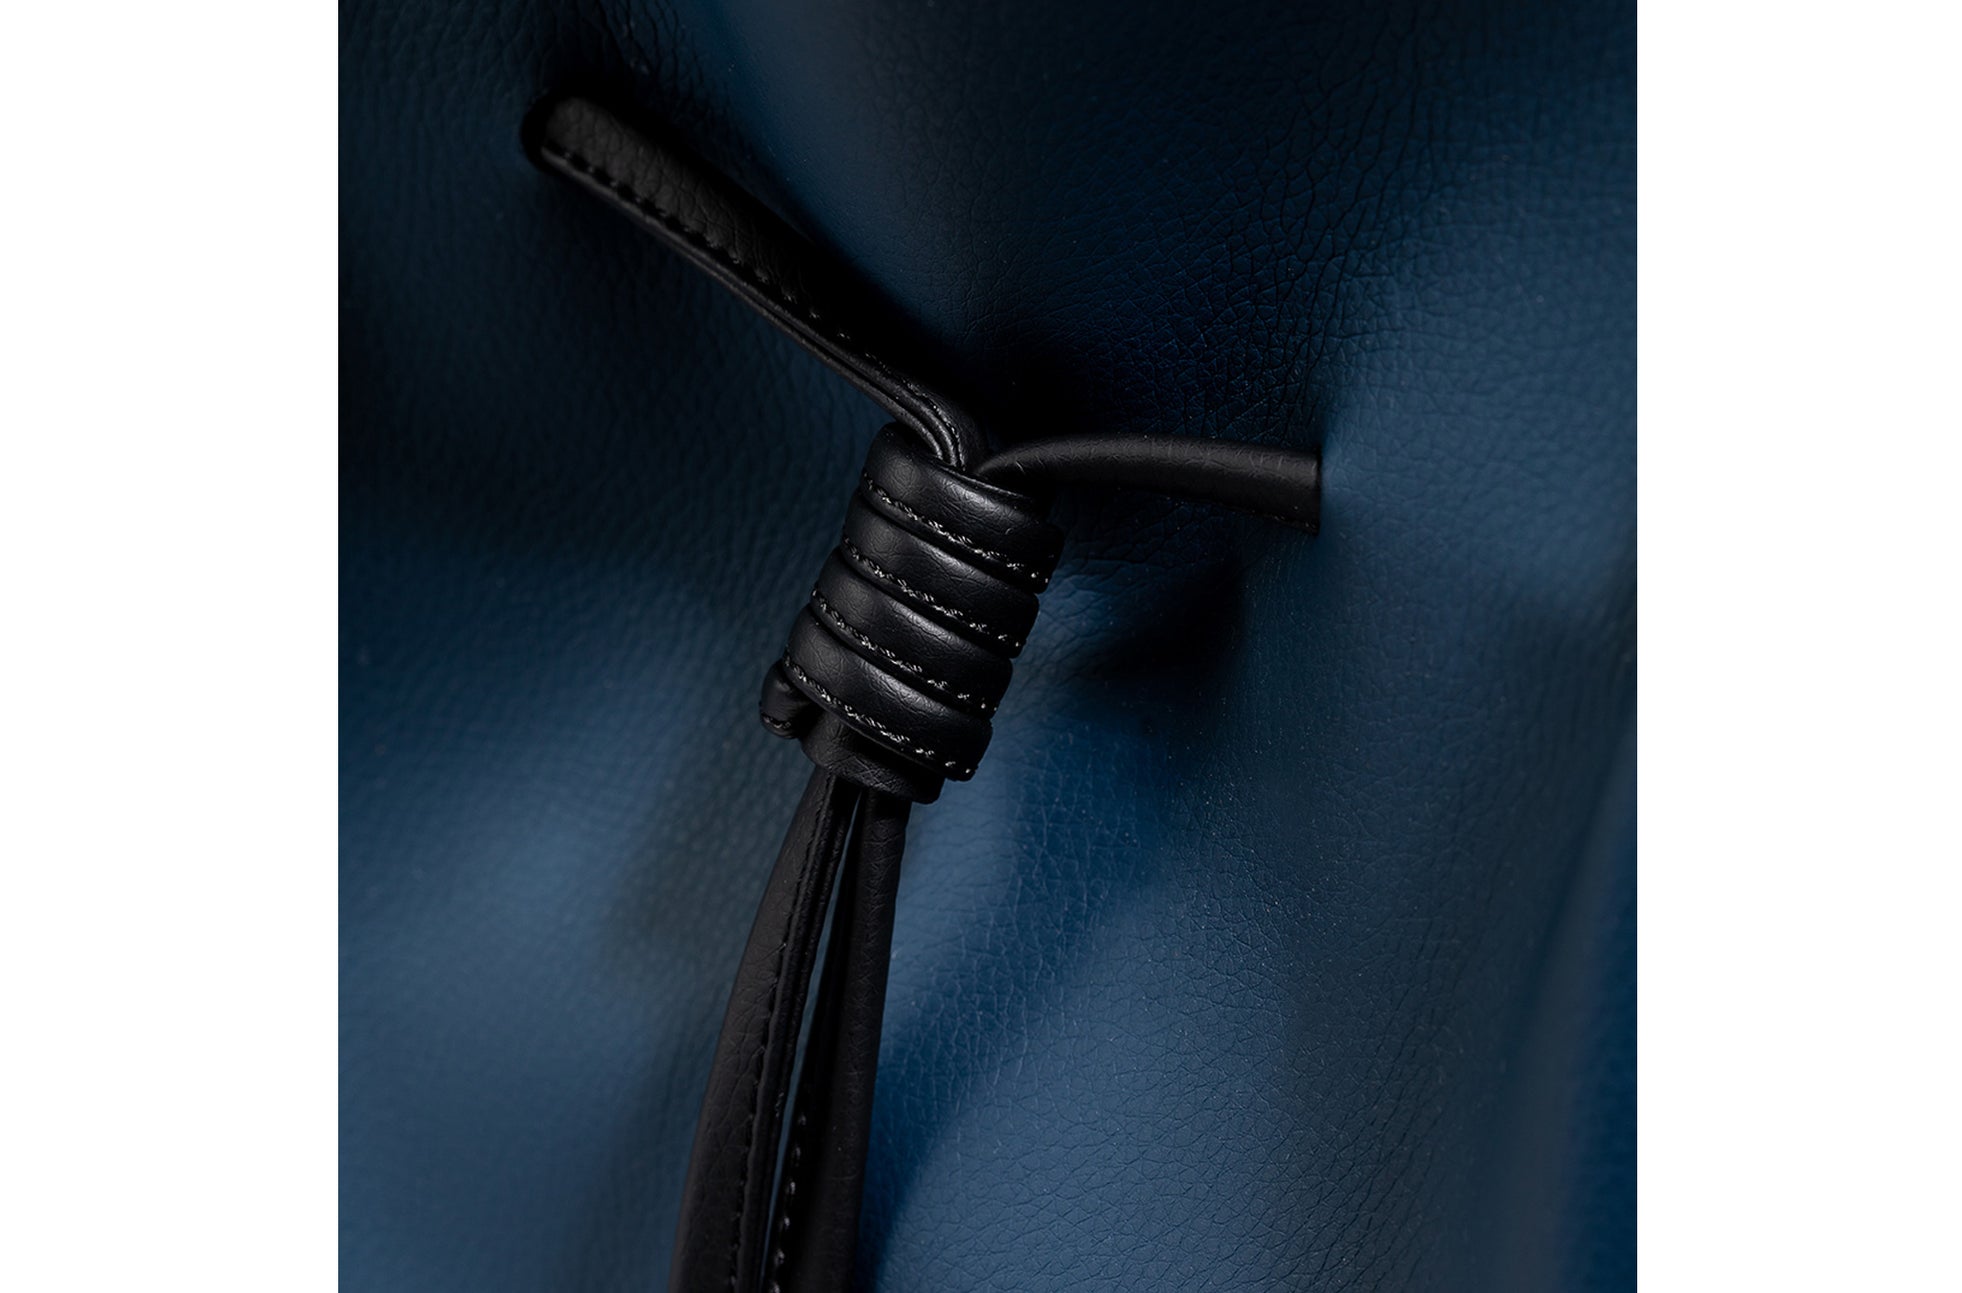 The Large Shopper in Technik-Leather in Denim & Black image 8